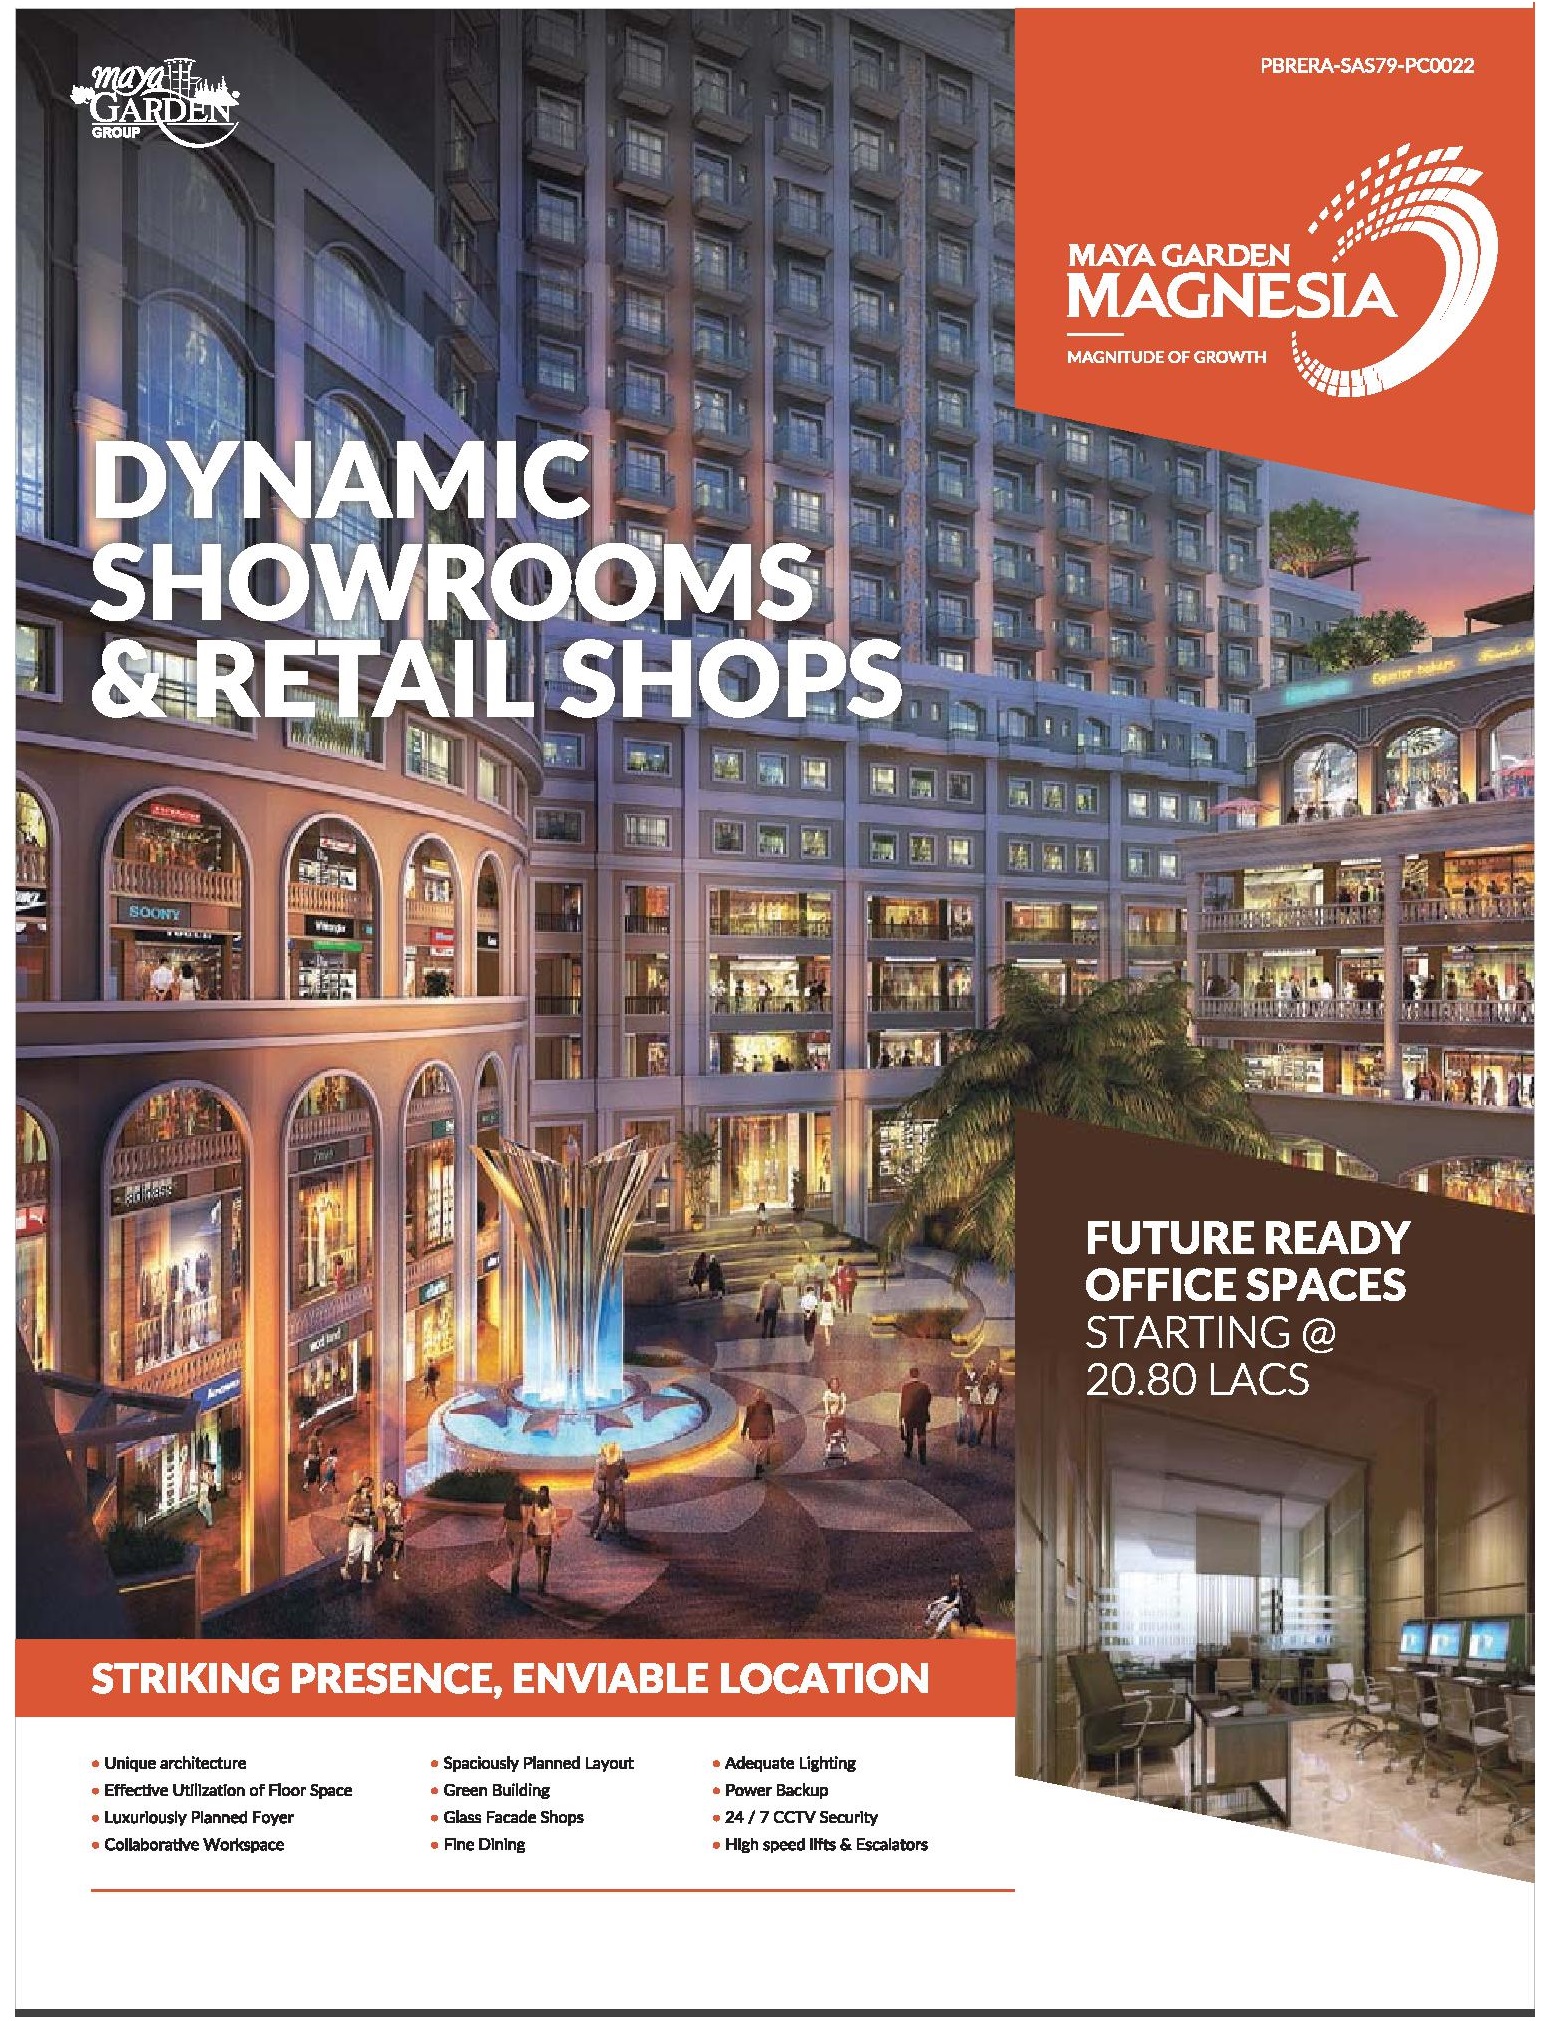 Launching dynamic showrooms & retail shops at Maya Garden Magnesia in Zirakpur, Chandigarh Update